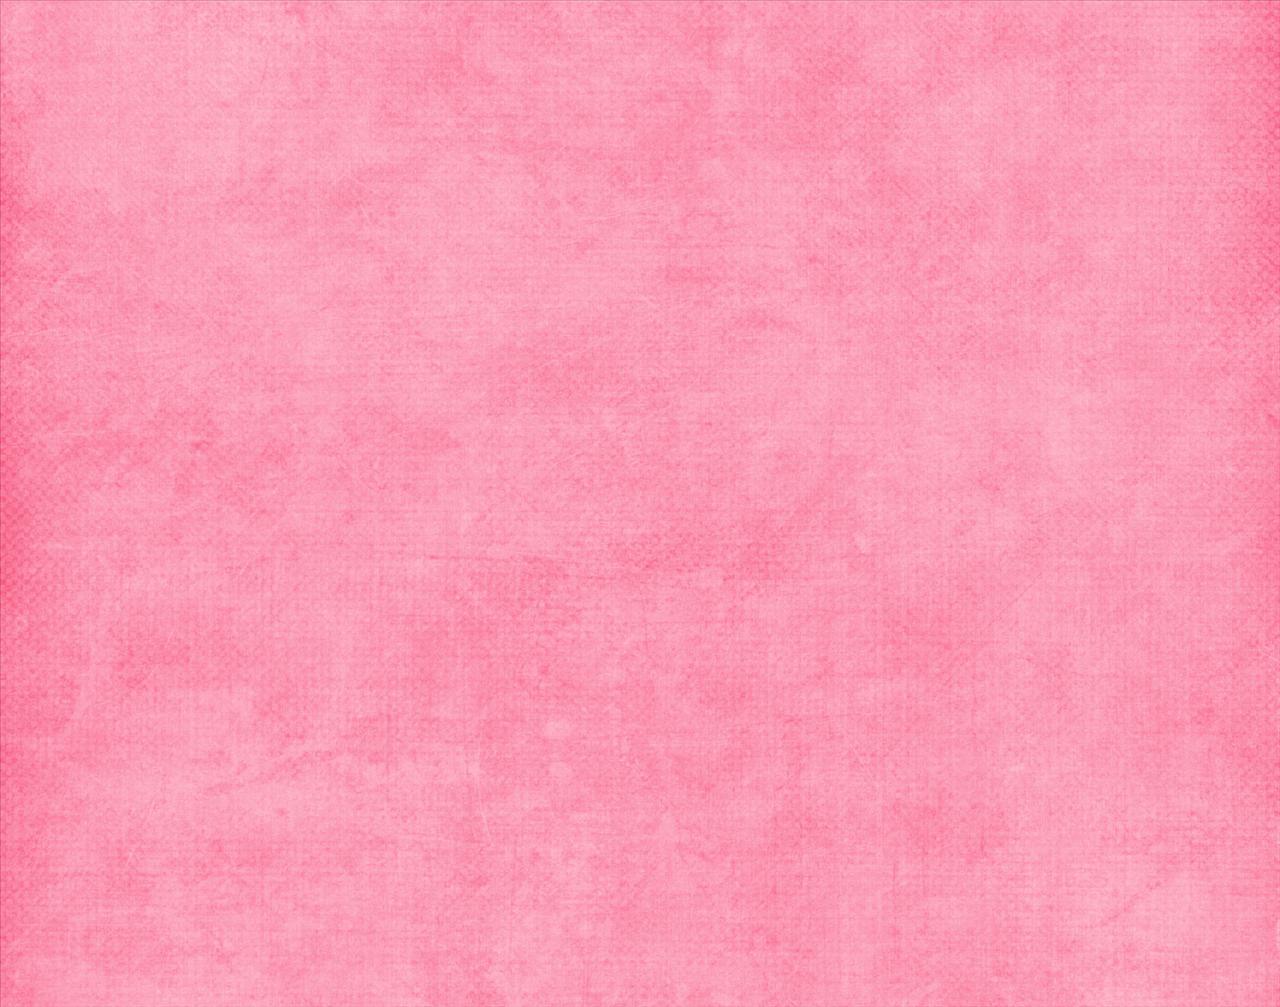 Free Download Bubblegum Pink Background Backgrounds Pinterest Pink